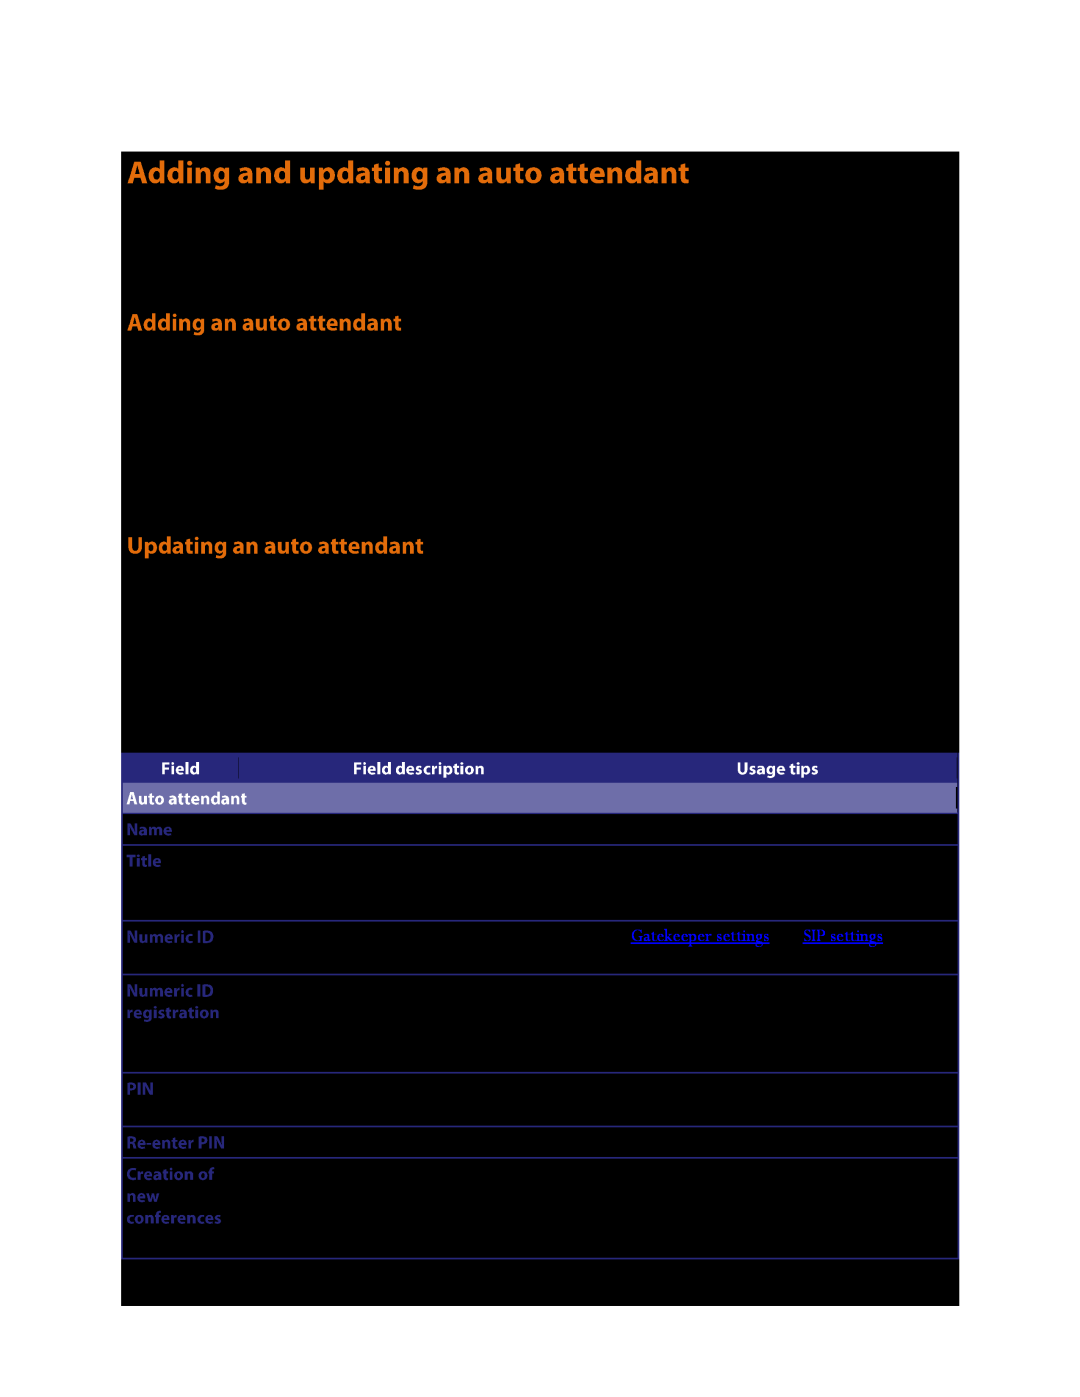 TANDBERG MSE 8510, MCU 4500 manual See Gatekeeper settings and SIP settings for 